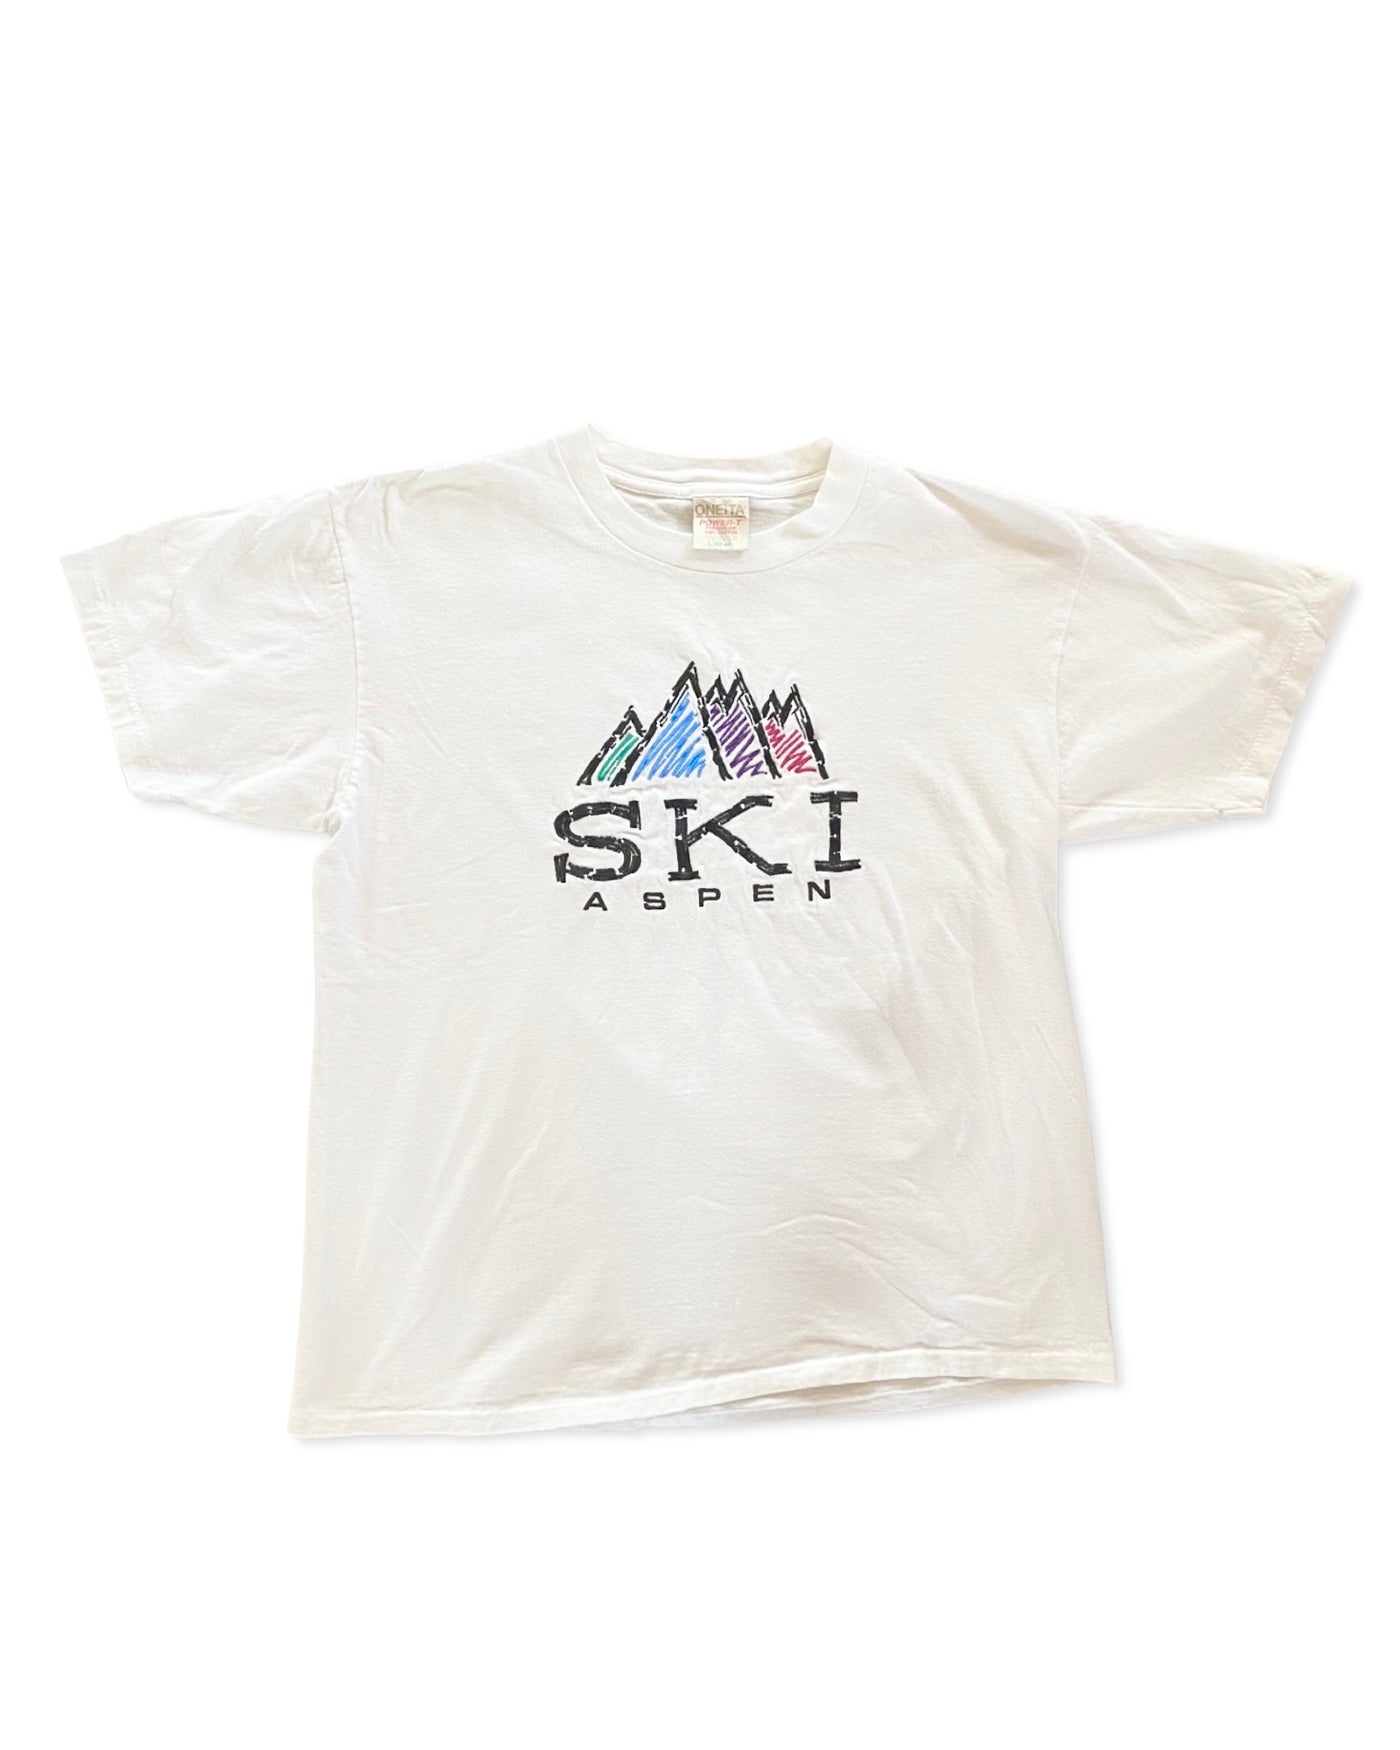 Vintage 90s Ski Aspen Embroidered T-Shirt